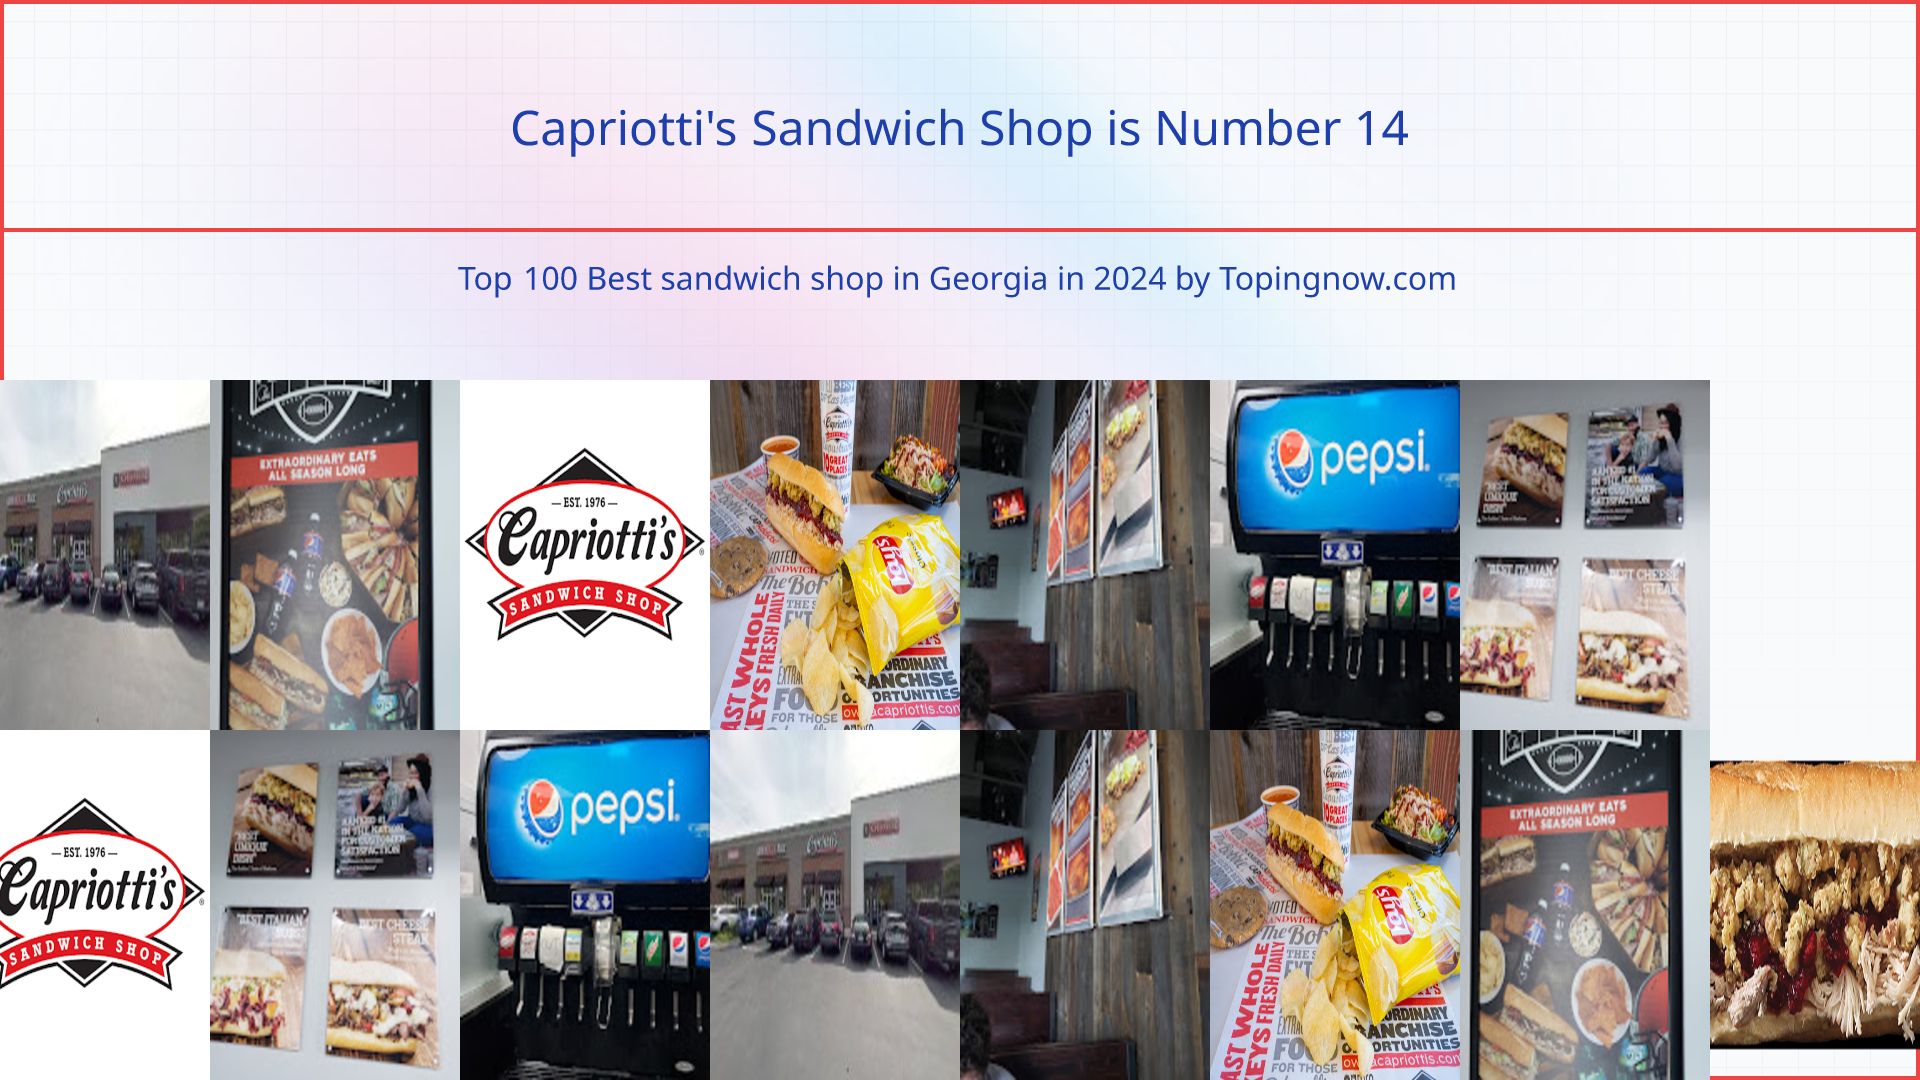 Capriotti's Sandwich Shop: Top 100 Best sandwich shop in Georgia in 2024